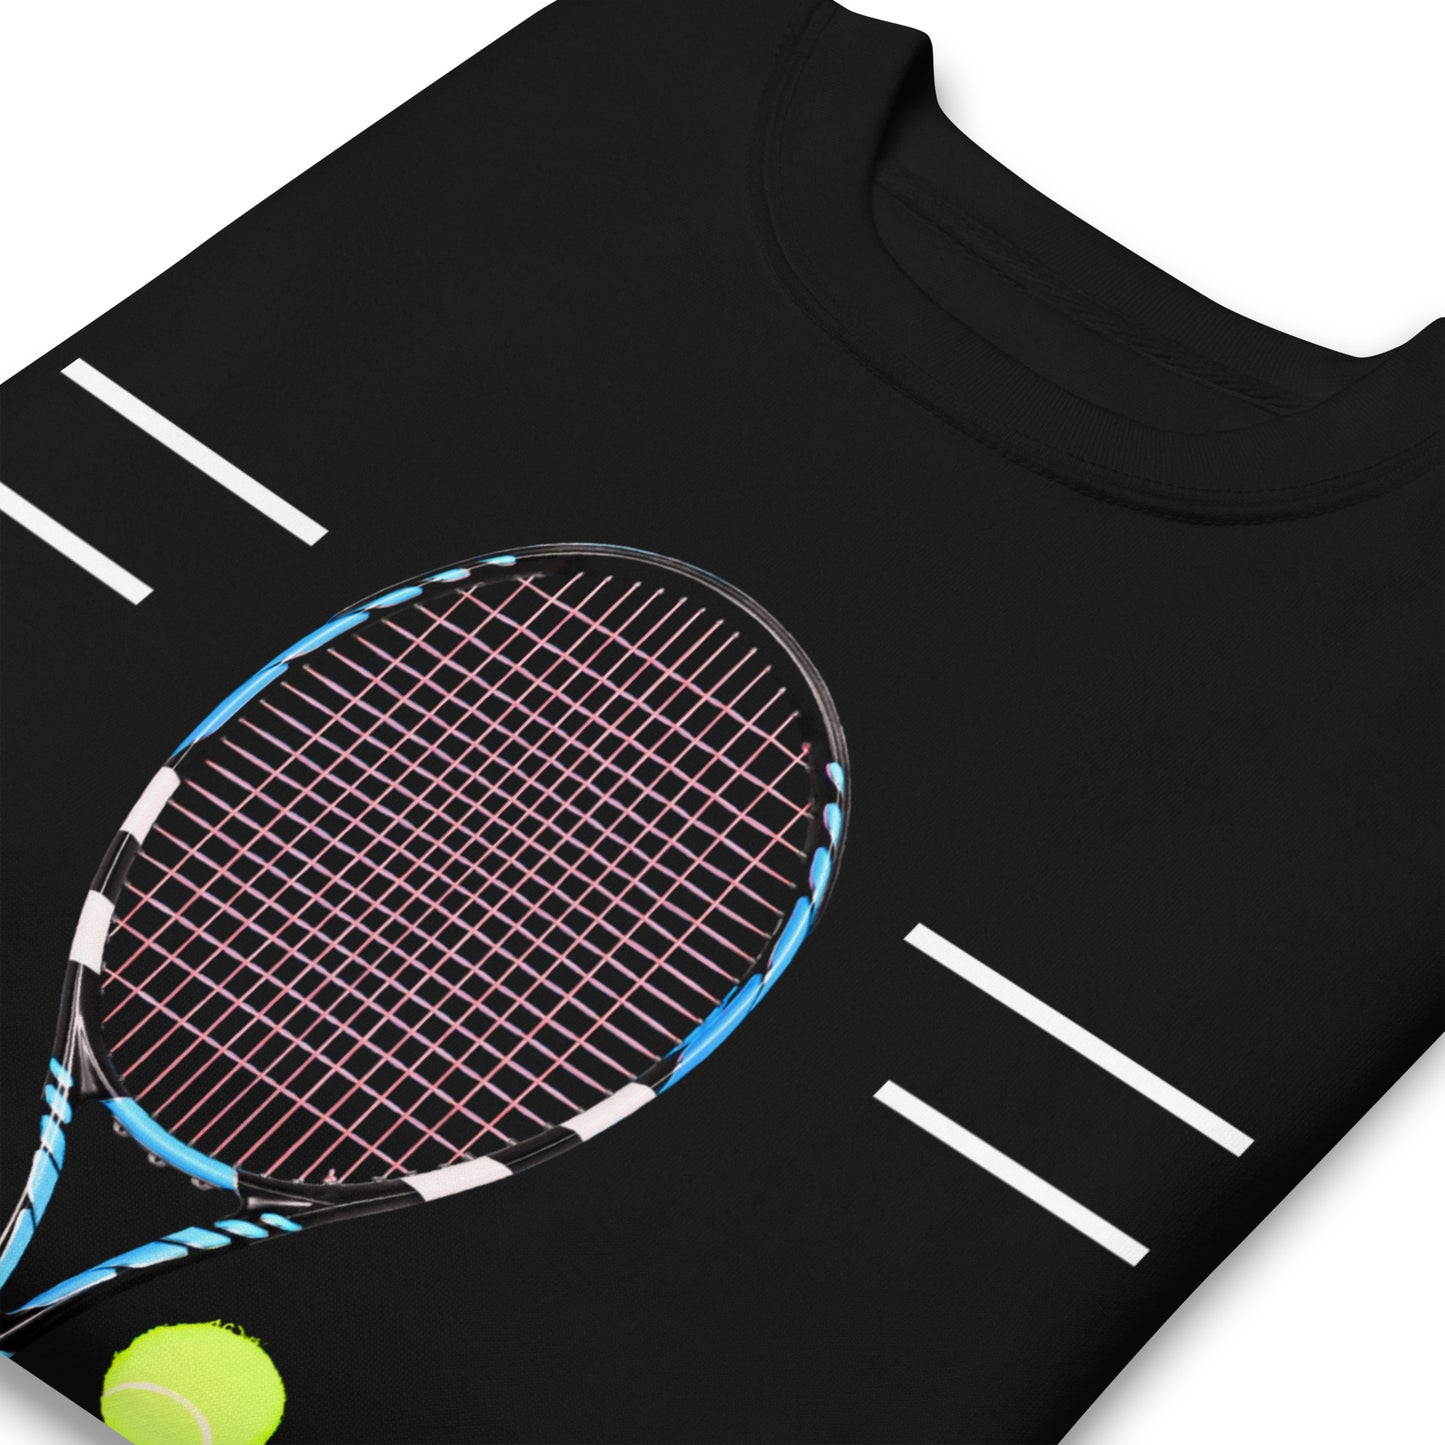 Pro Tennis Racquet Premium Crewneck Sweatshirt